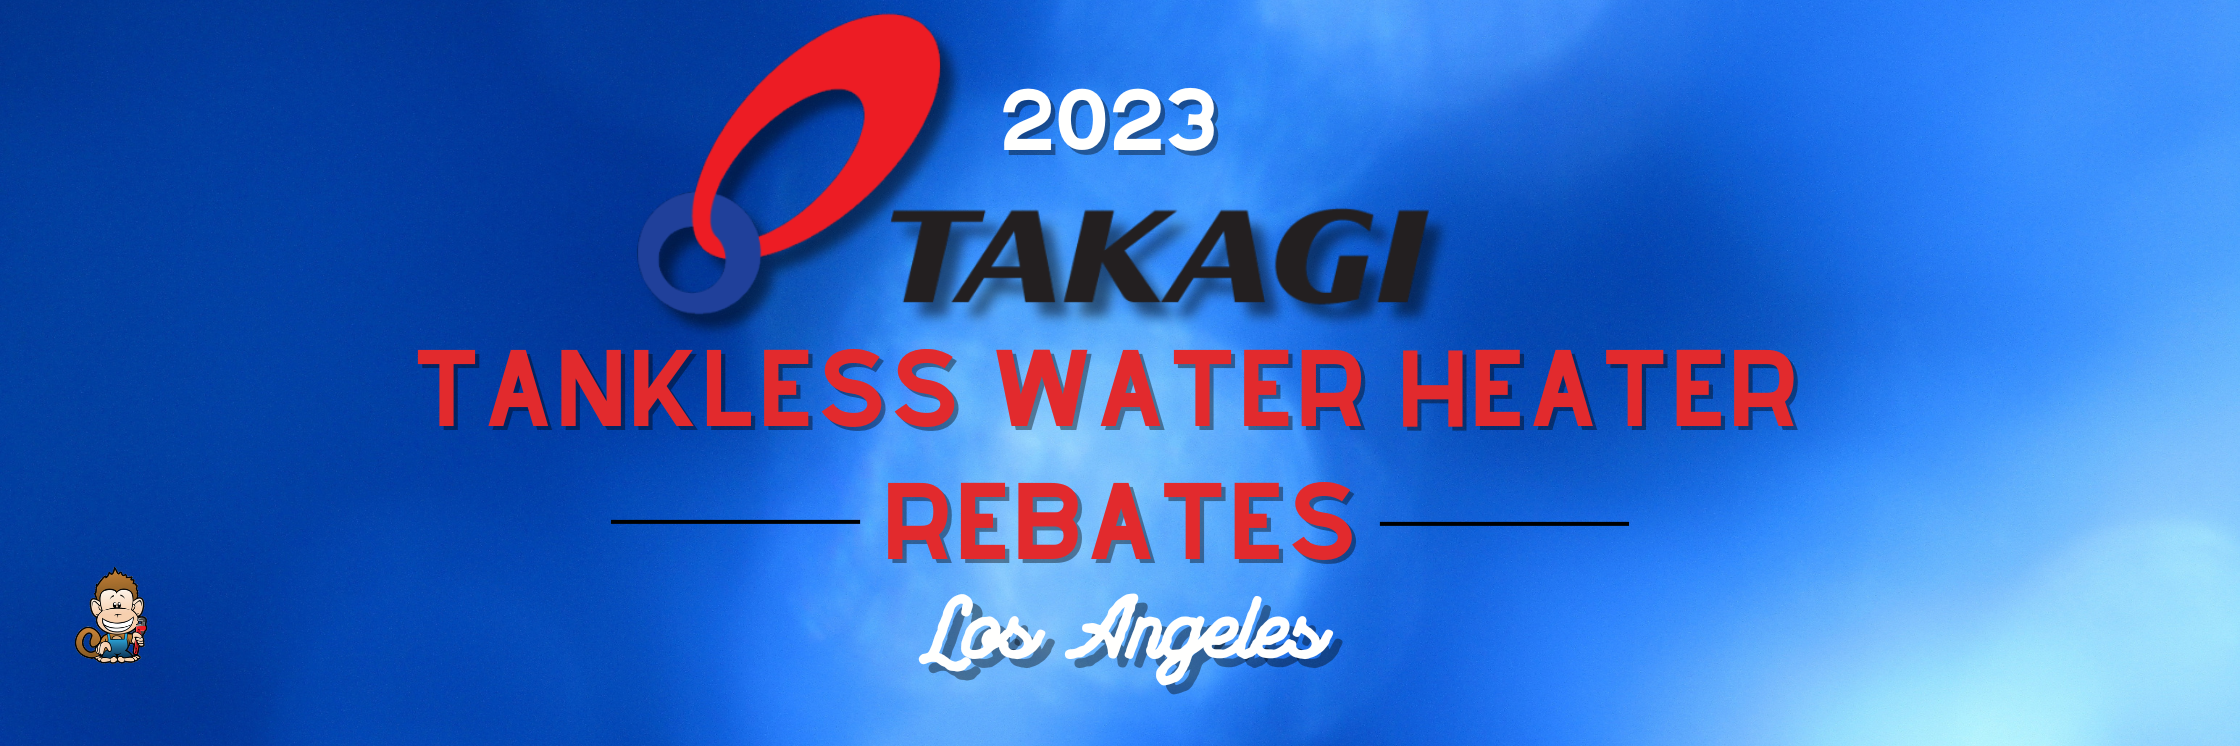 2023 Takagi Tankless Water Heater Rebates for Los Angeles